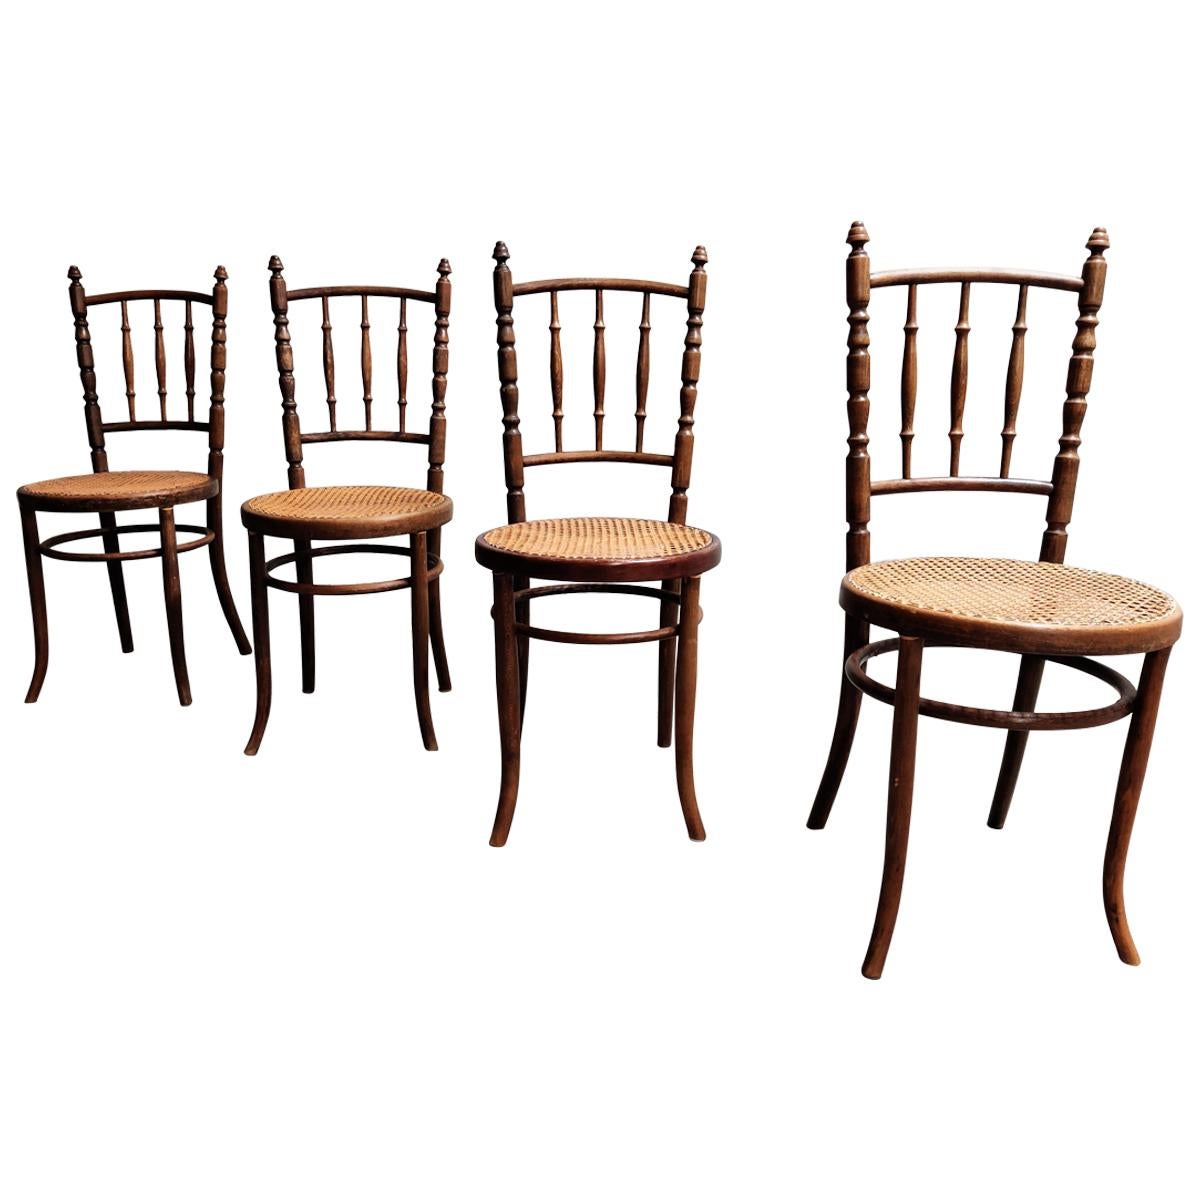 Set of 4 Bentwood Chairs by Jacob U. Josef Kohn, 1930s Austria